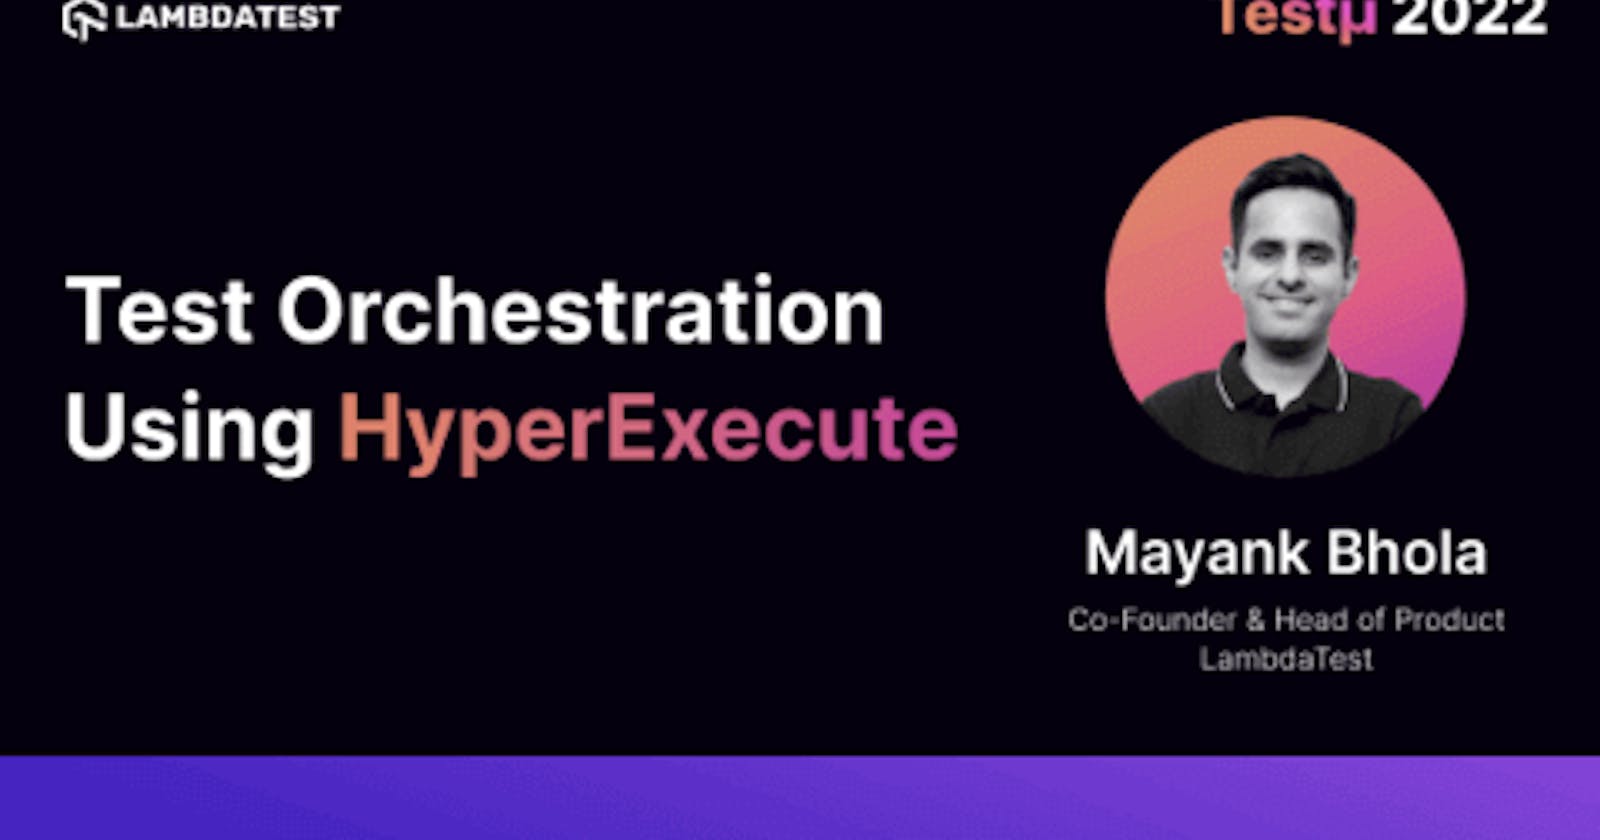 Test Orchestration using HyperExecute: Mayank Bhola [Testμ 2022]